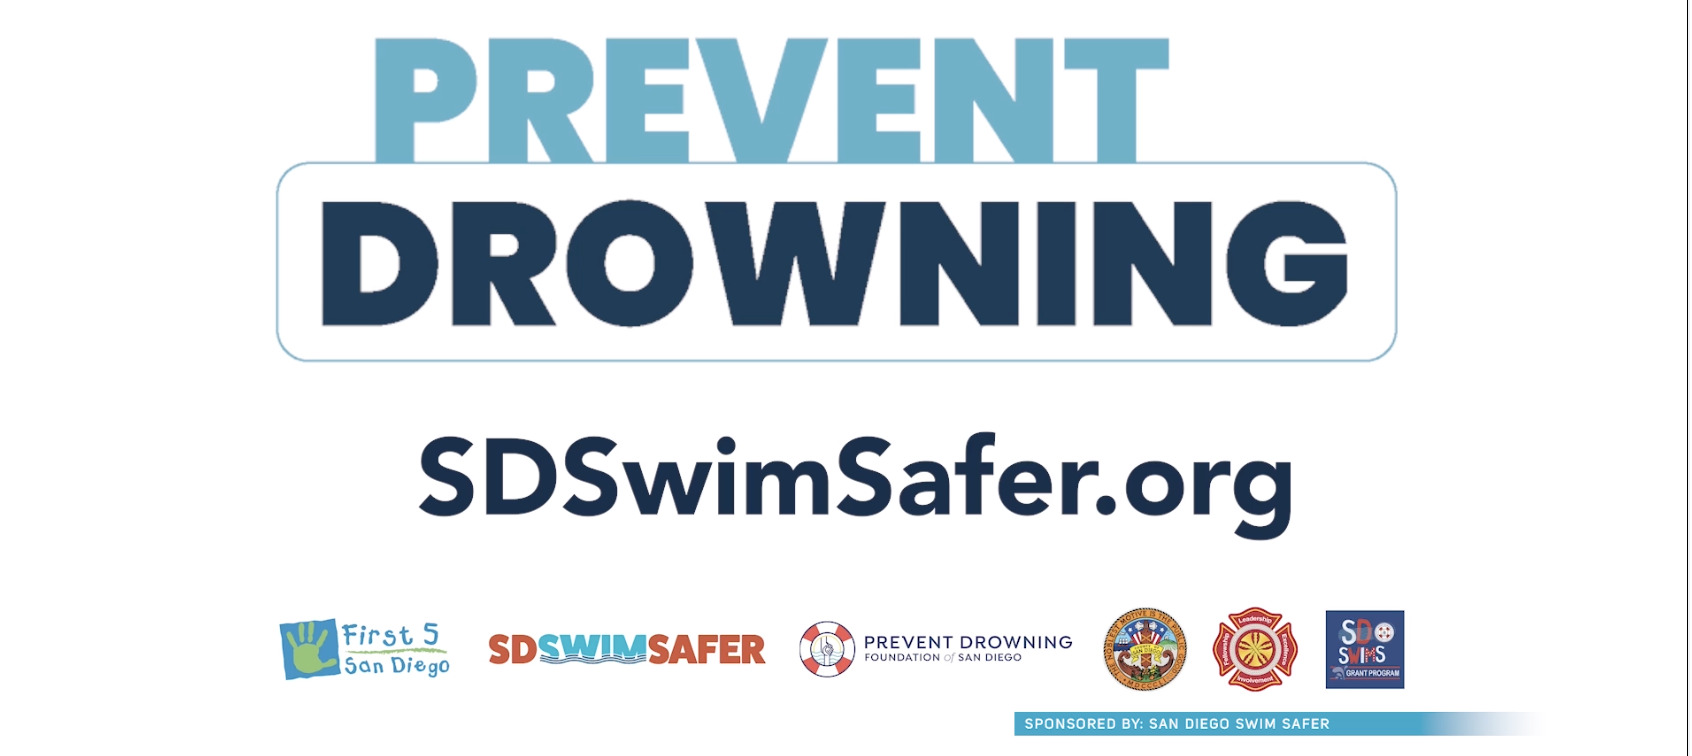 prevent drowning sdswimsafer.org